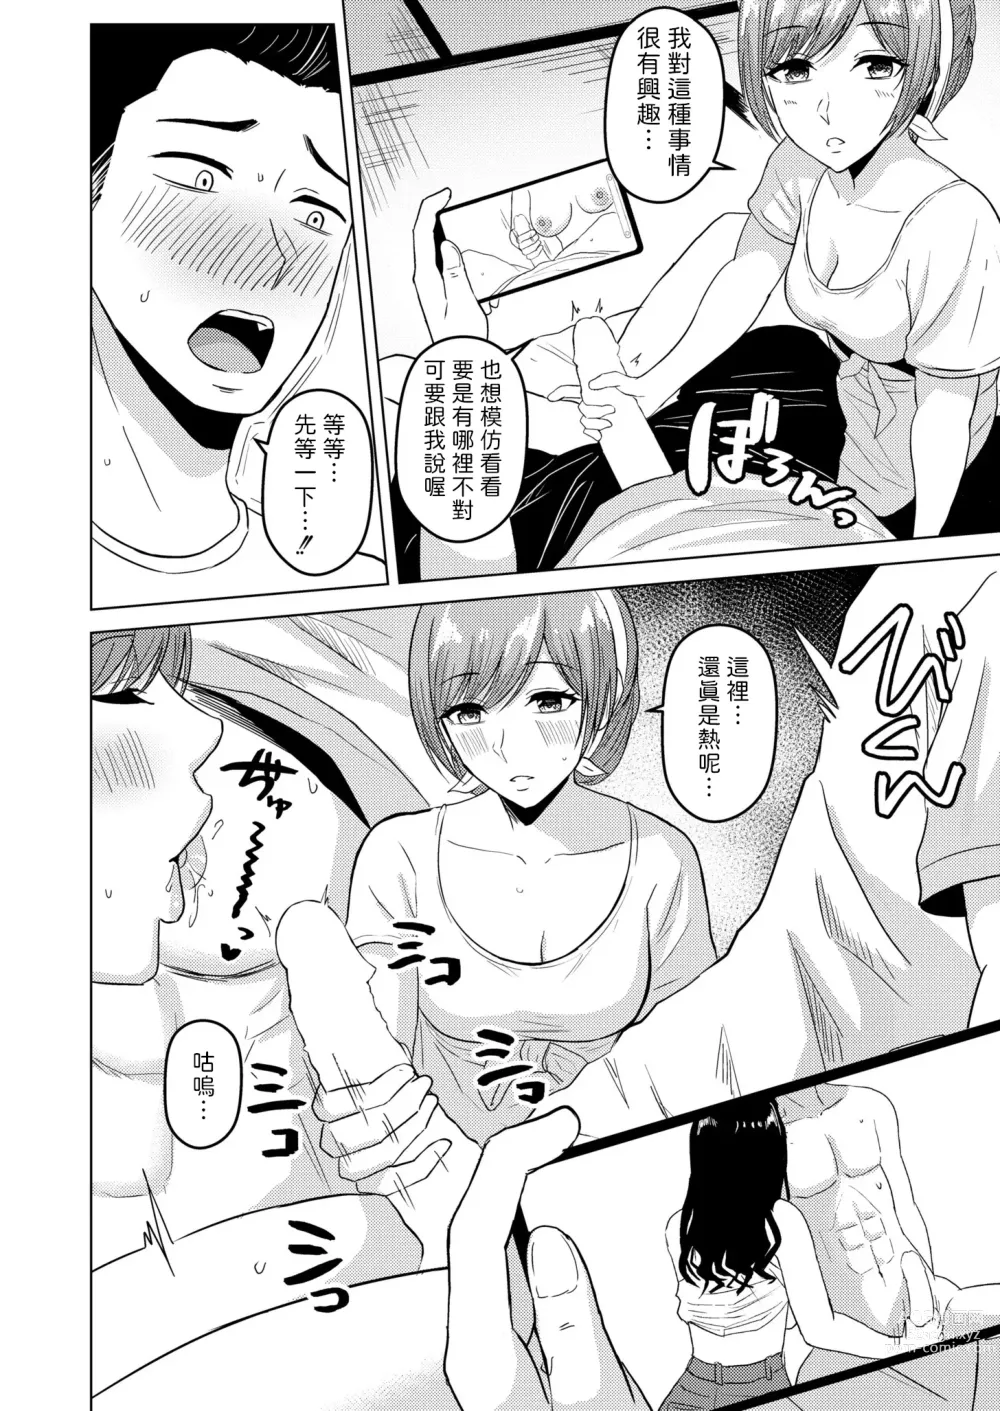 Page 8 of manga Natsue